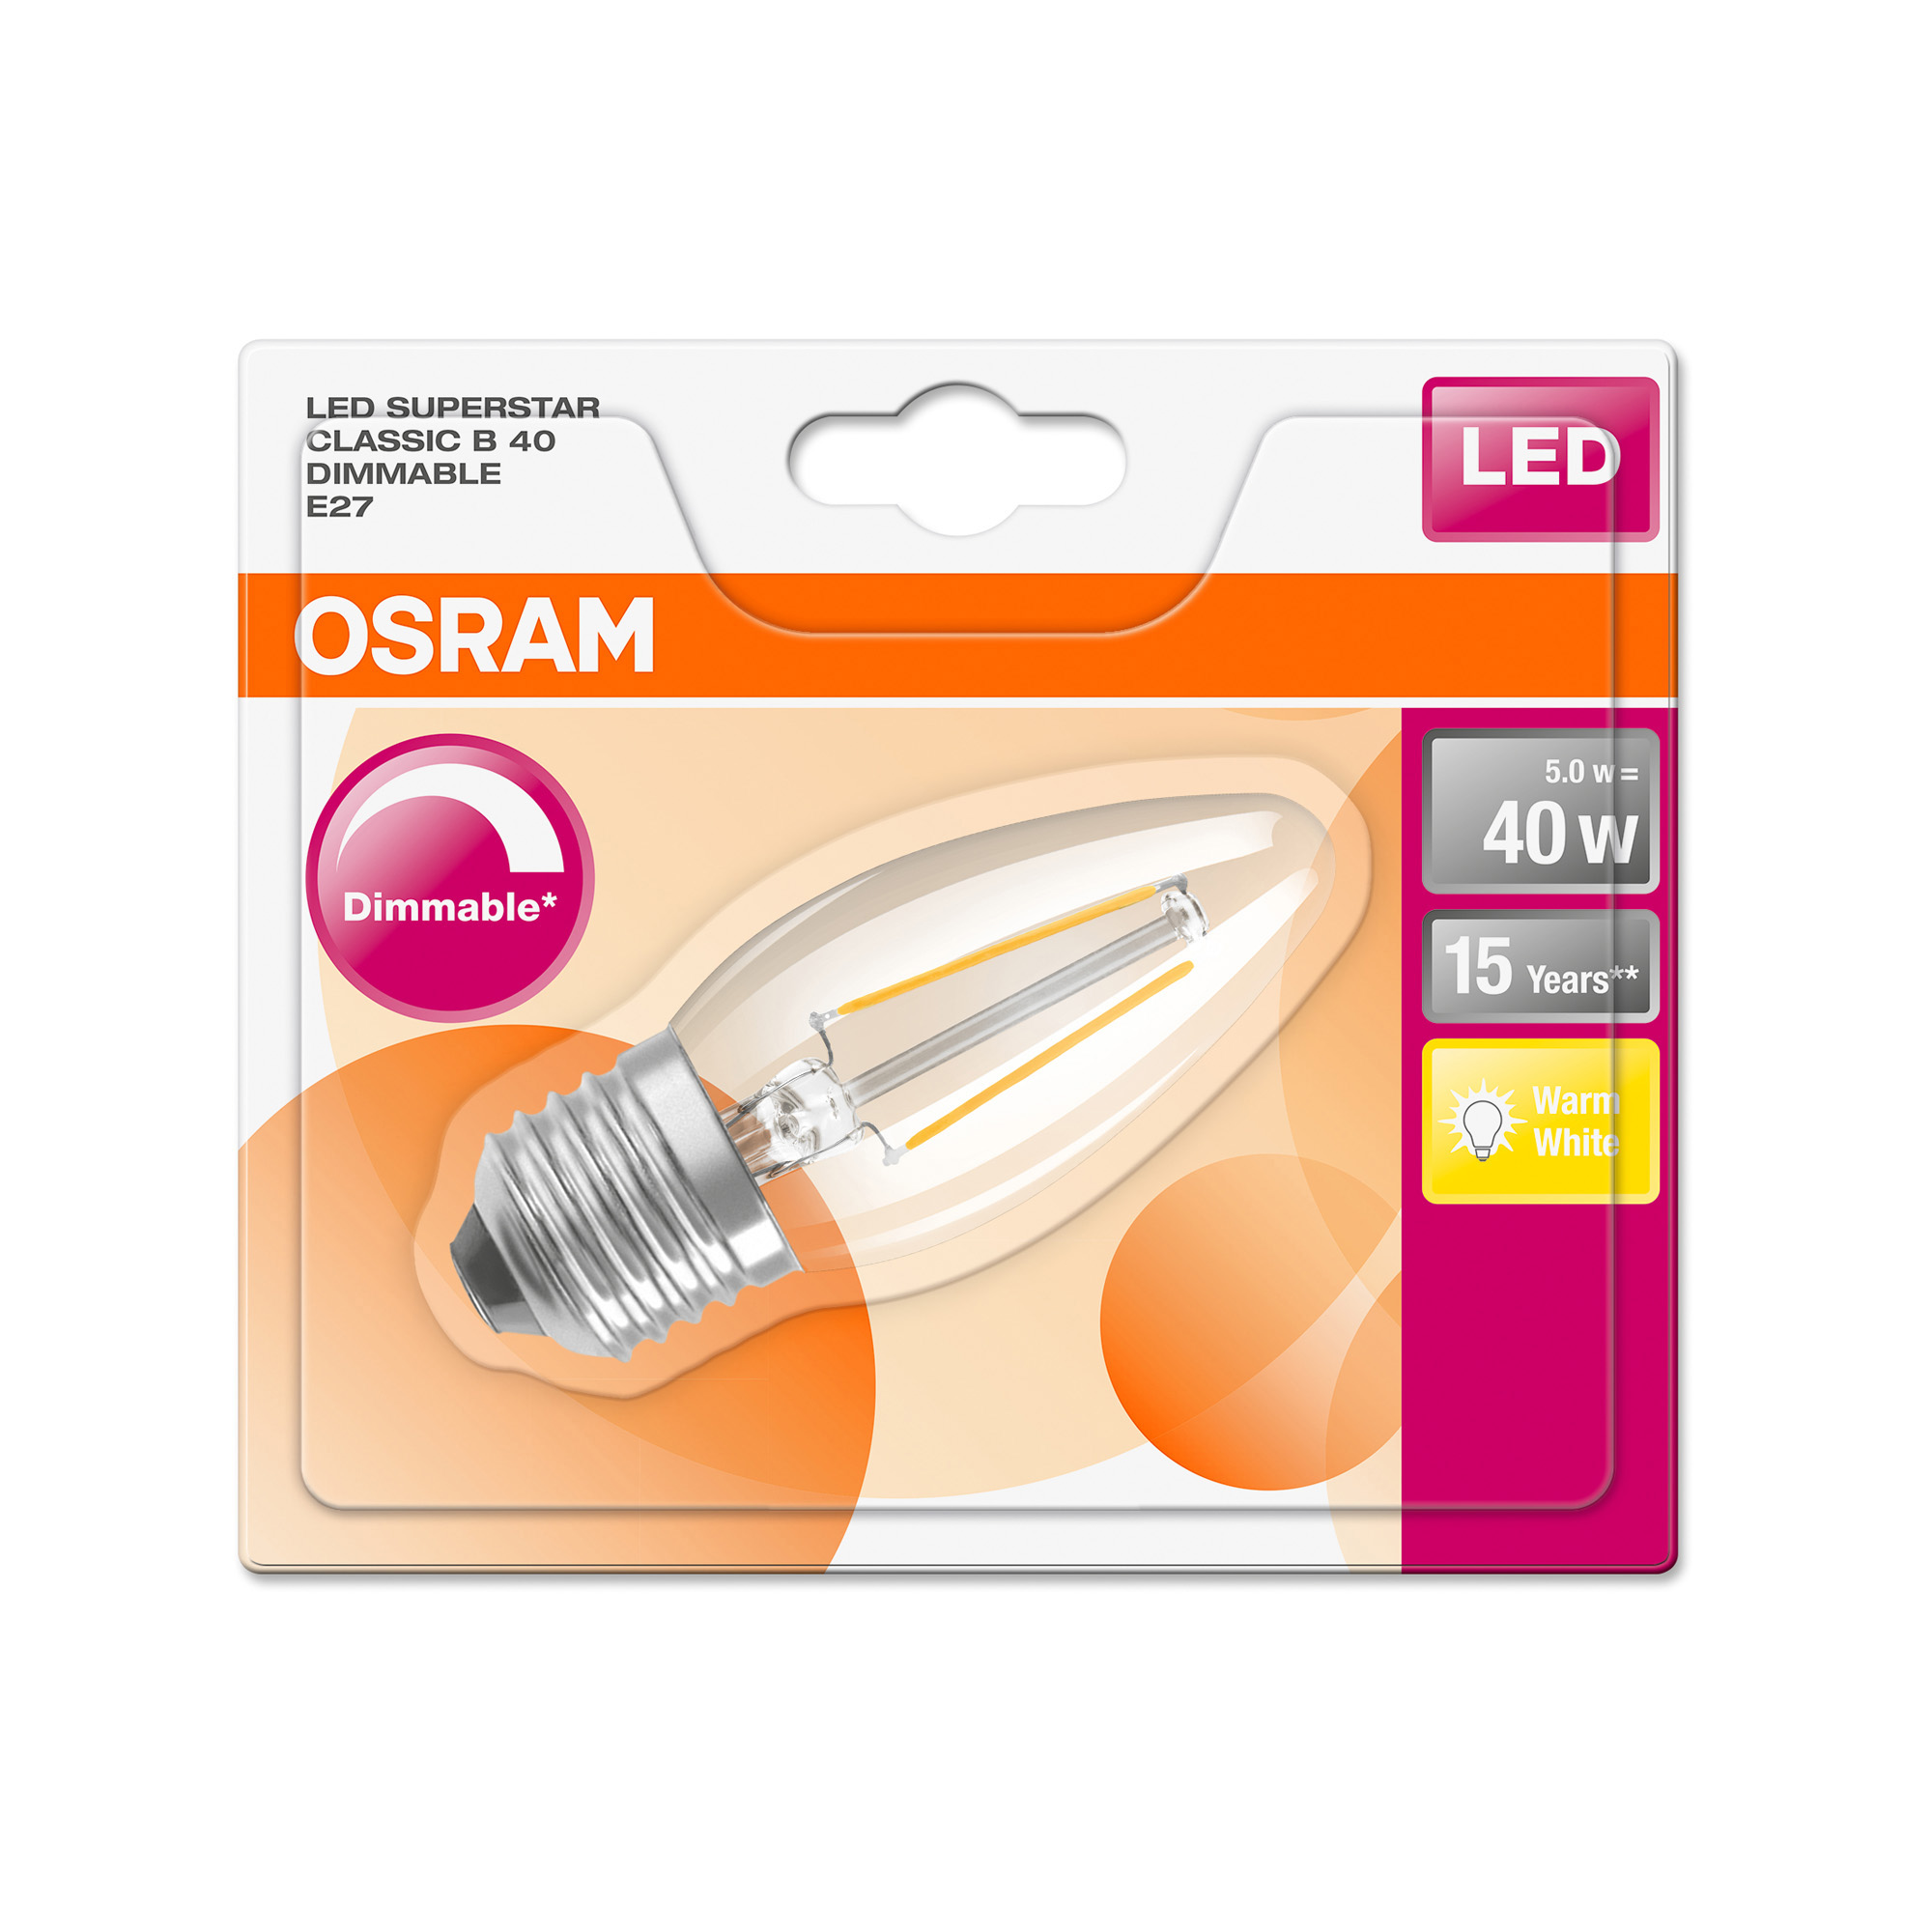 Osram LED SUPERSTAR FILAMENT clear DIM CLB 40 5W 827 E27 2700K 470lm